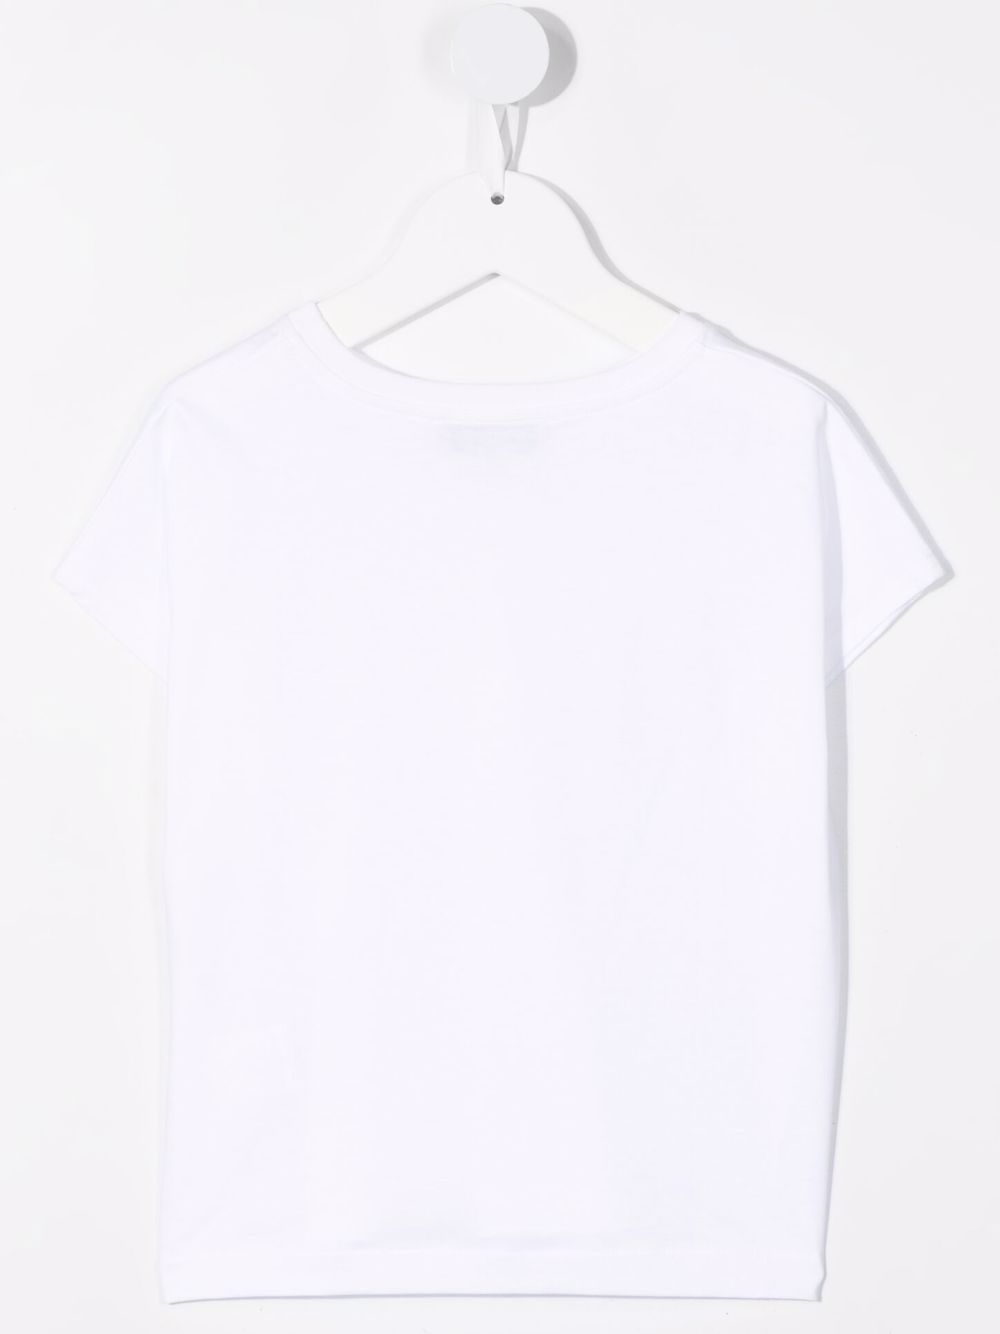 PUCCI Junior T-shirt met logoprint - Wit